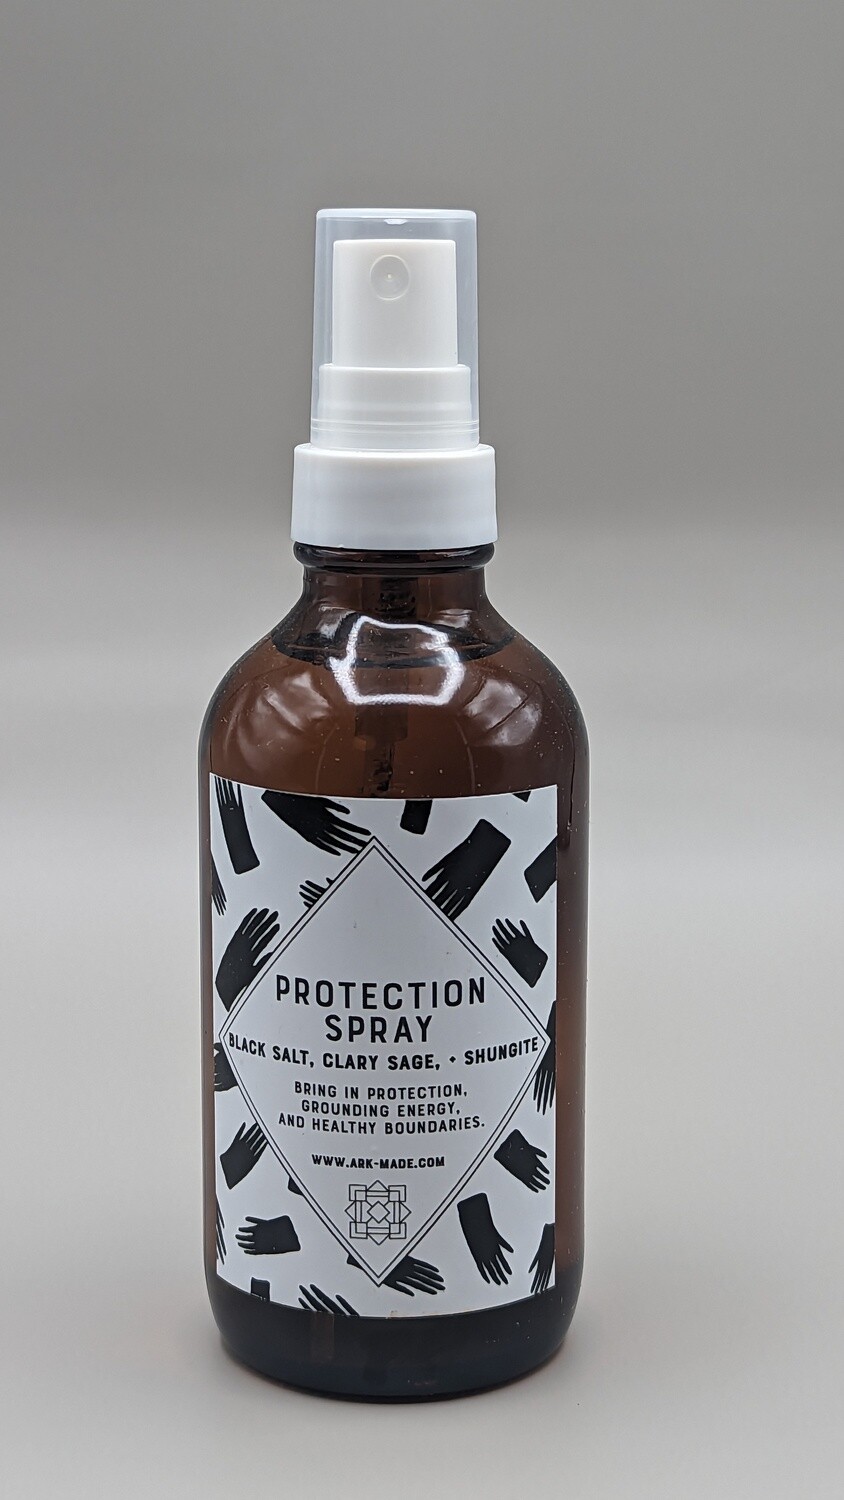 Protection Spray - Black Salt, Clary Sage, and Shungite